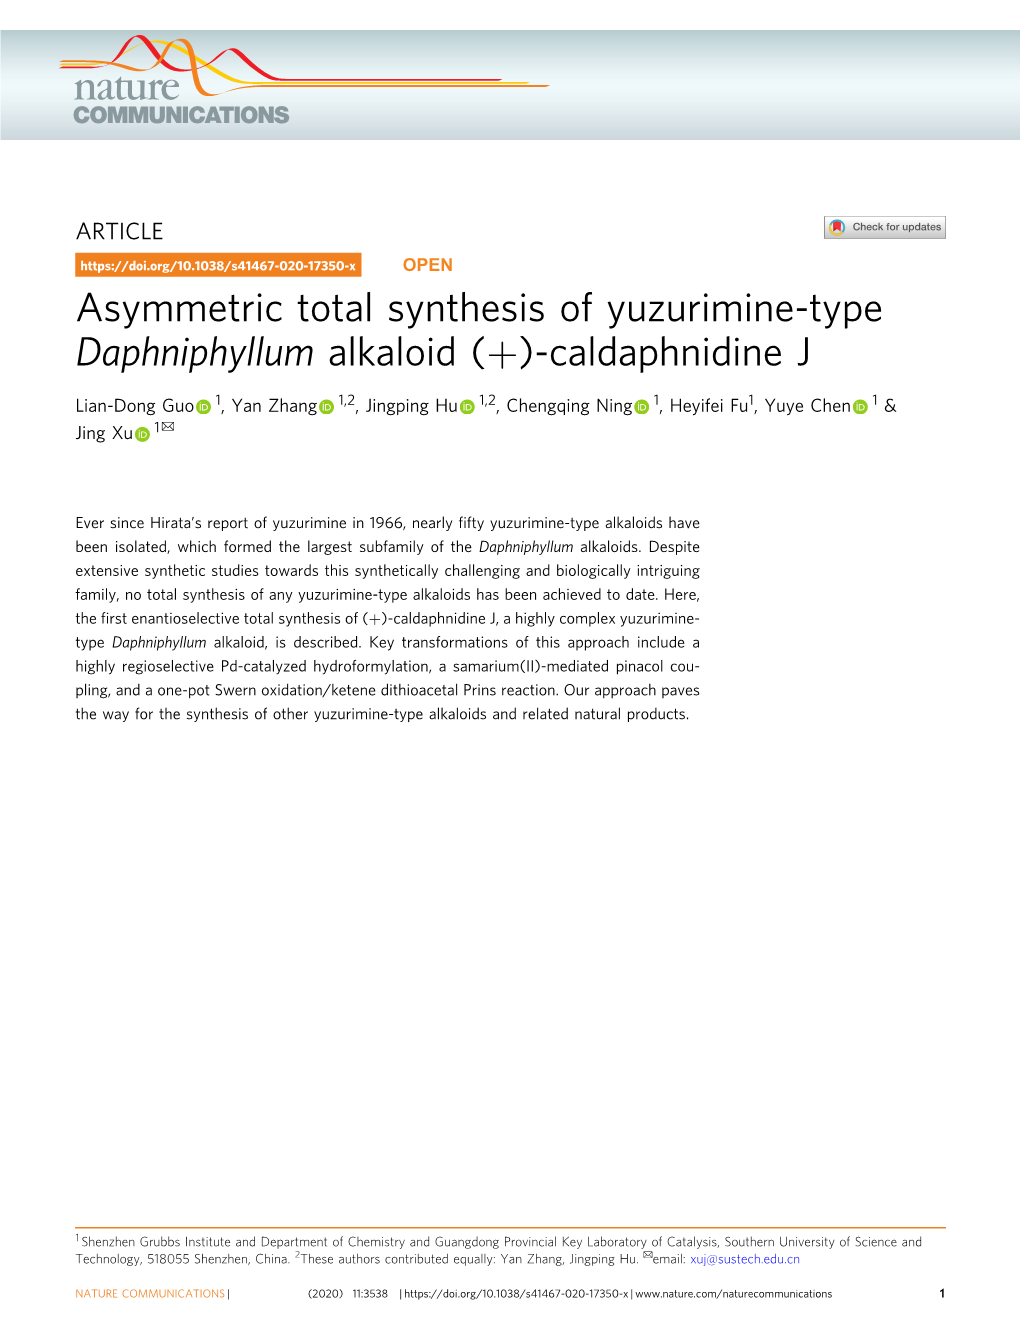 Asymmetric Total Synthesis of Yuzurimine-Type Daphniphyllum Alkaloid (+)-Caldaphnidine J